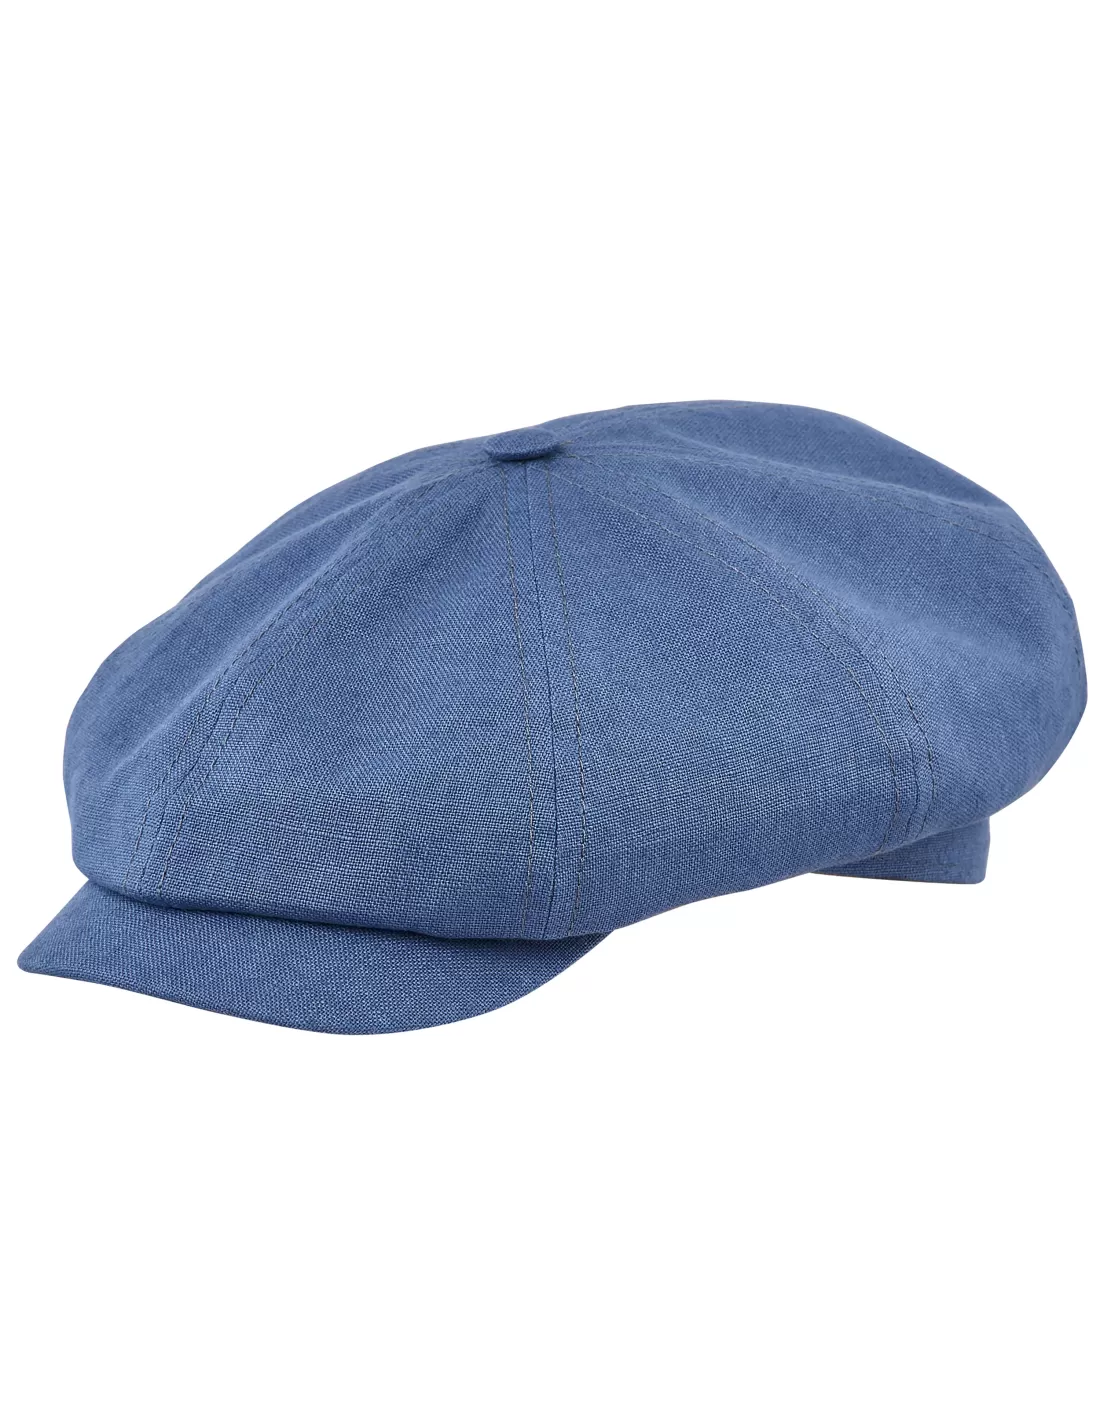 Rowdy Summer Linen 8 Panel Newsboy Cap, a perfect sun protective hat